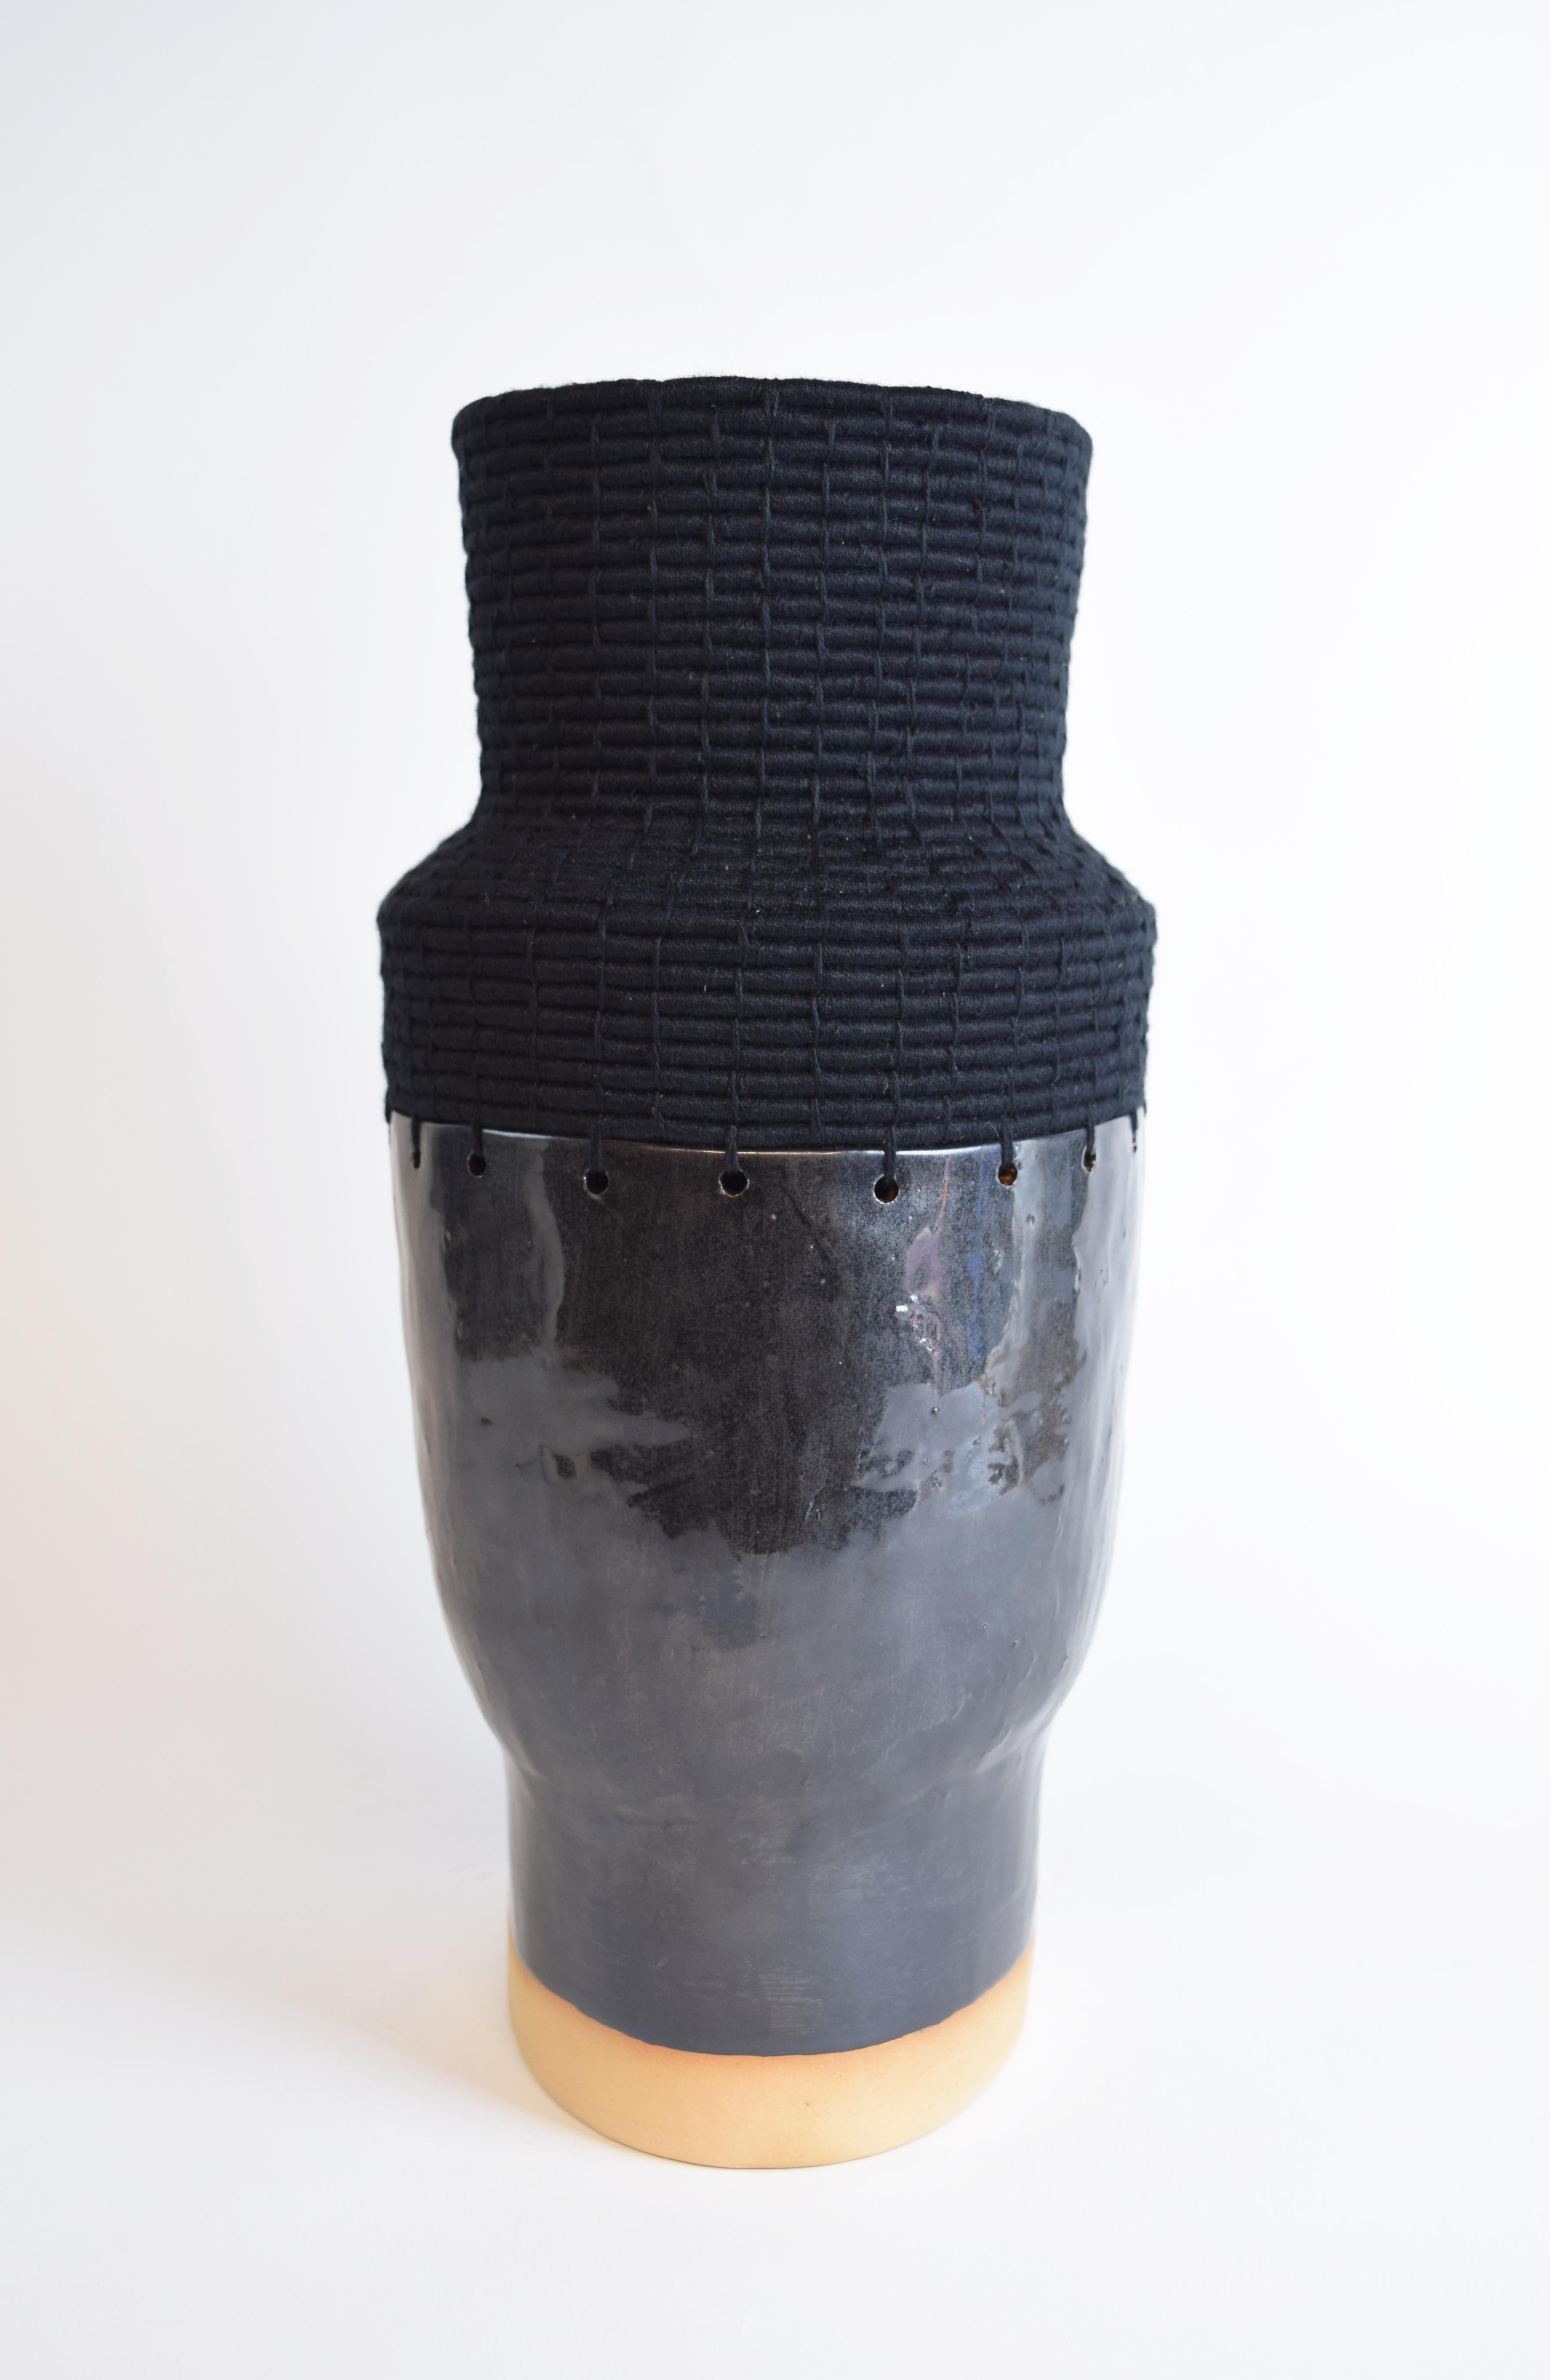 Organic Modern One of a Kind Handmade Ceramic Vessel #783, Black Glaze, Woven Black Cotton For Sale